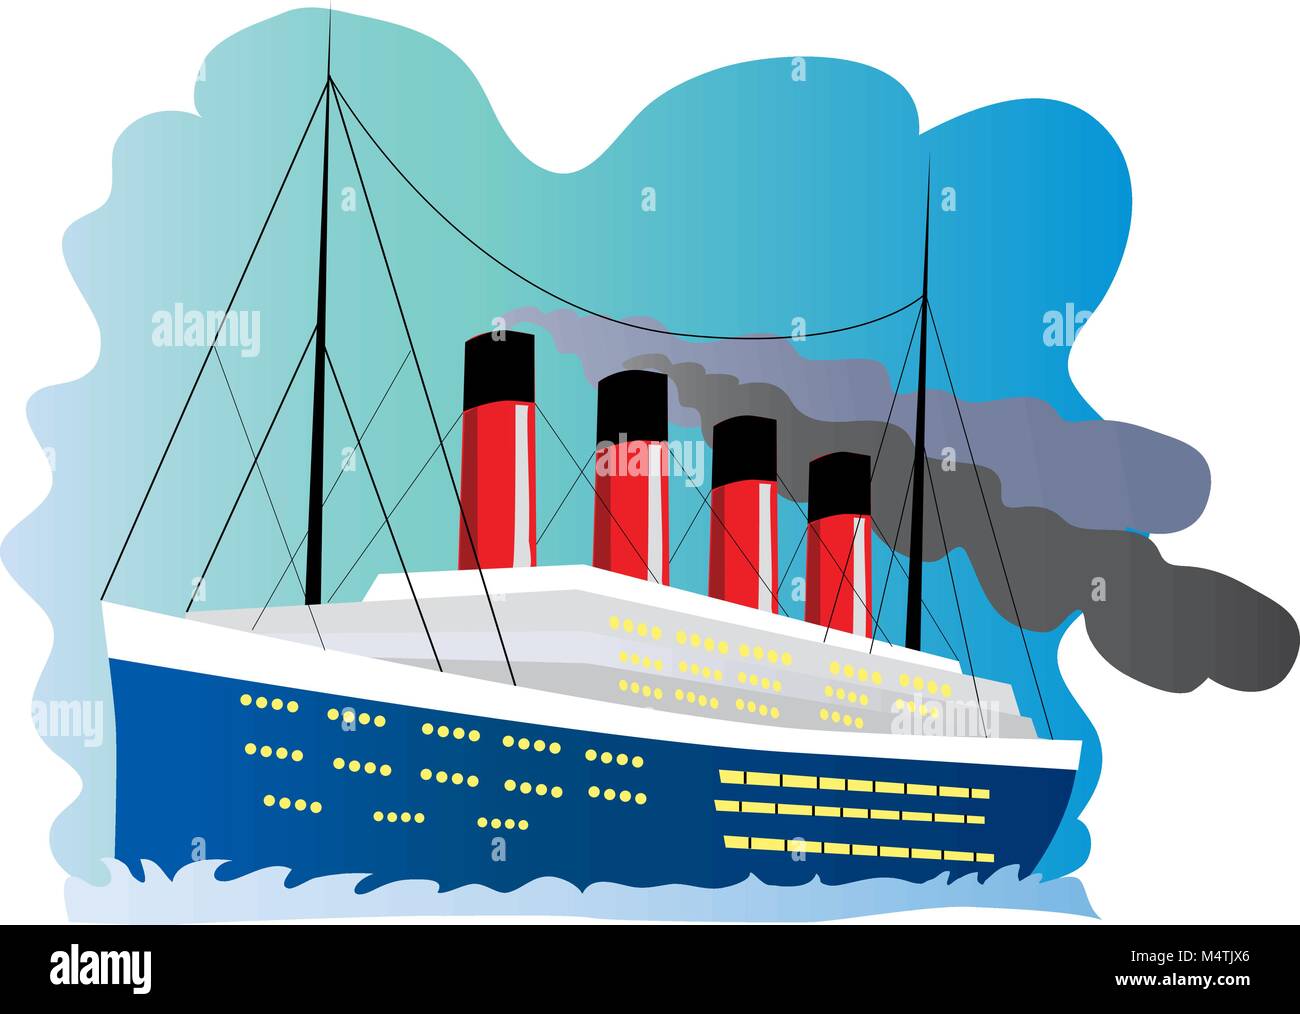 Ein Cartoon Illustration des Schiffes Titanic Stock Vektor